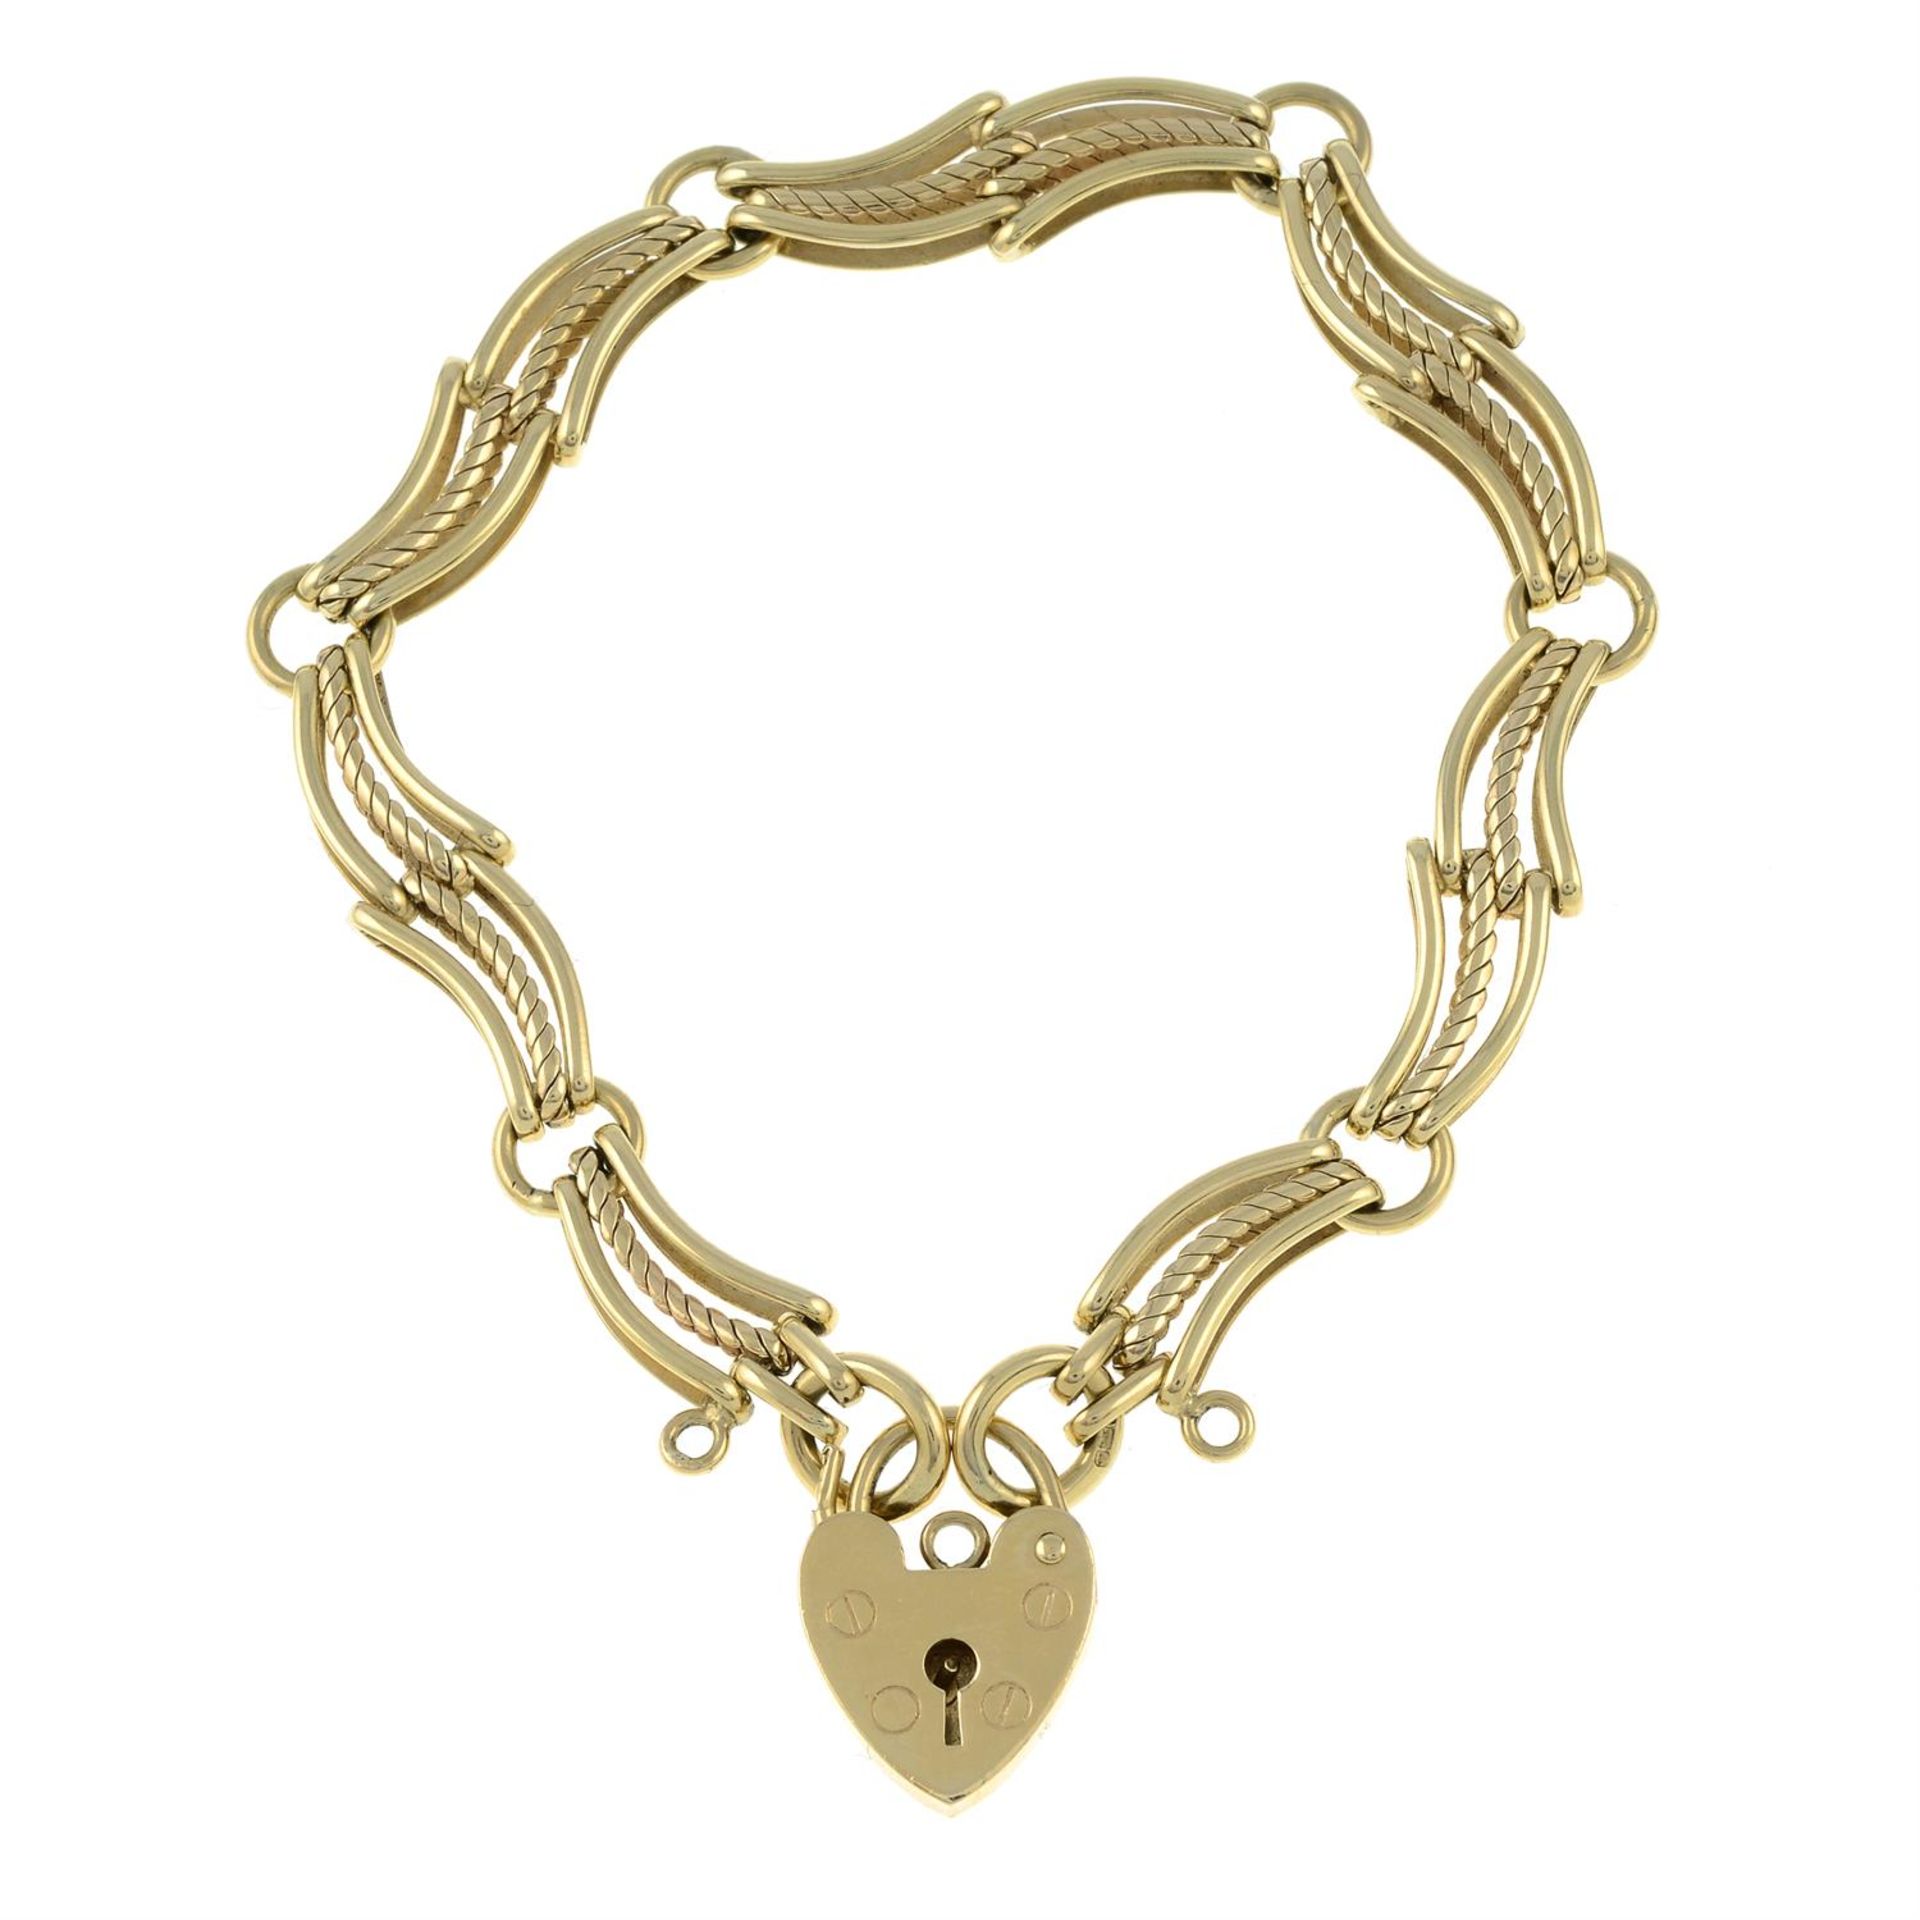 A fancy-link bracelet, with 9ct gold heart-shape lock clasp.